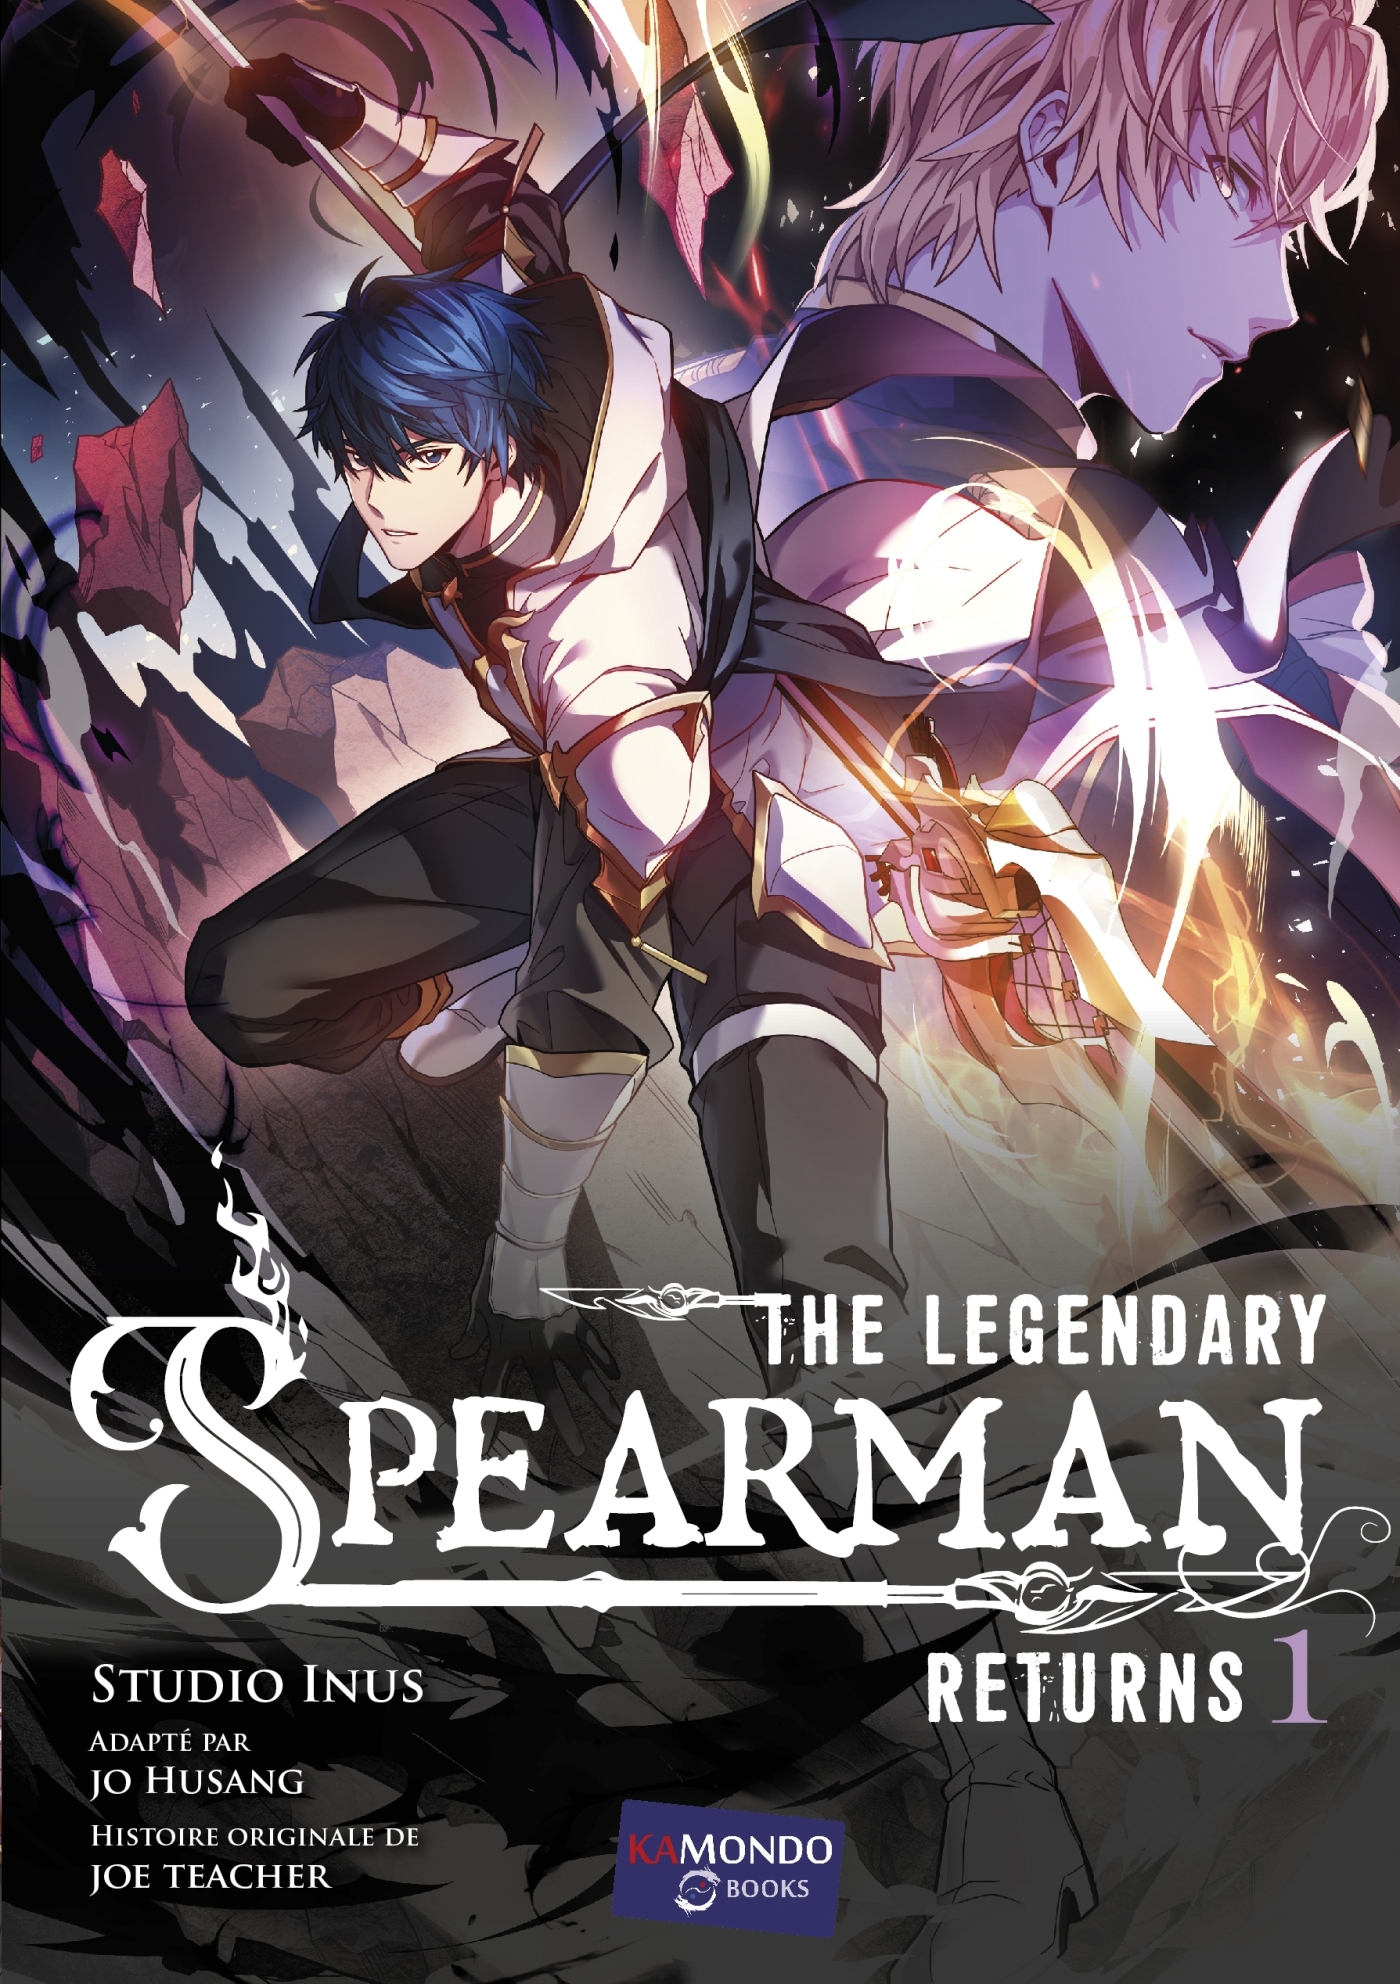 The legendary spearman